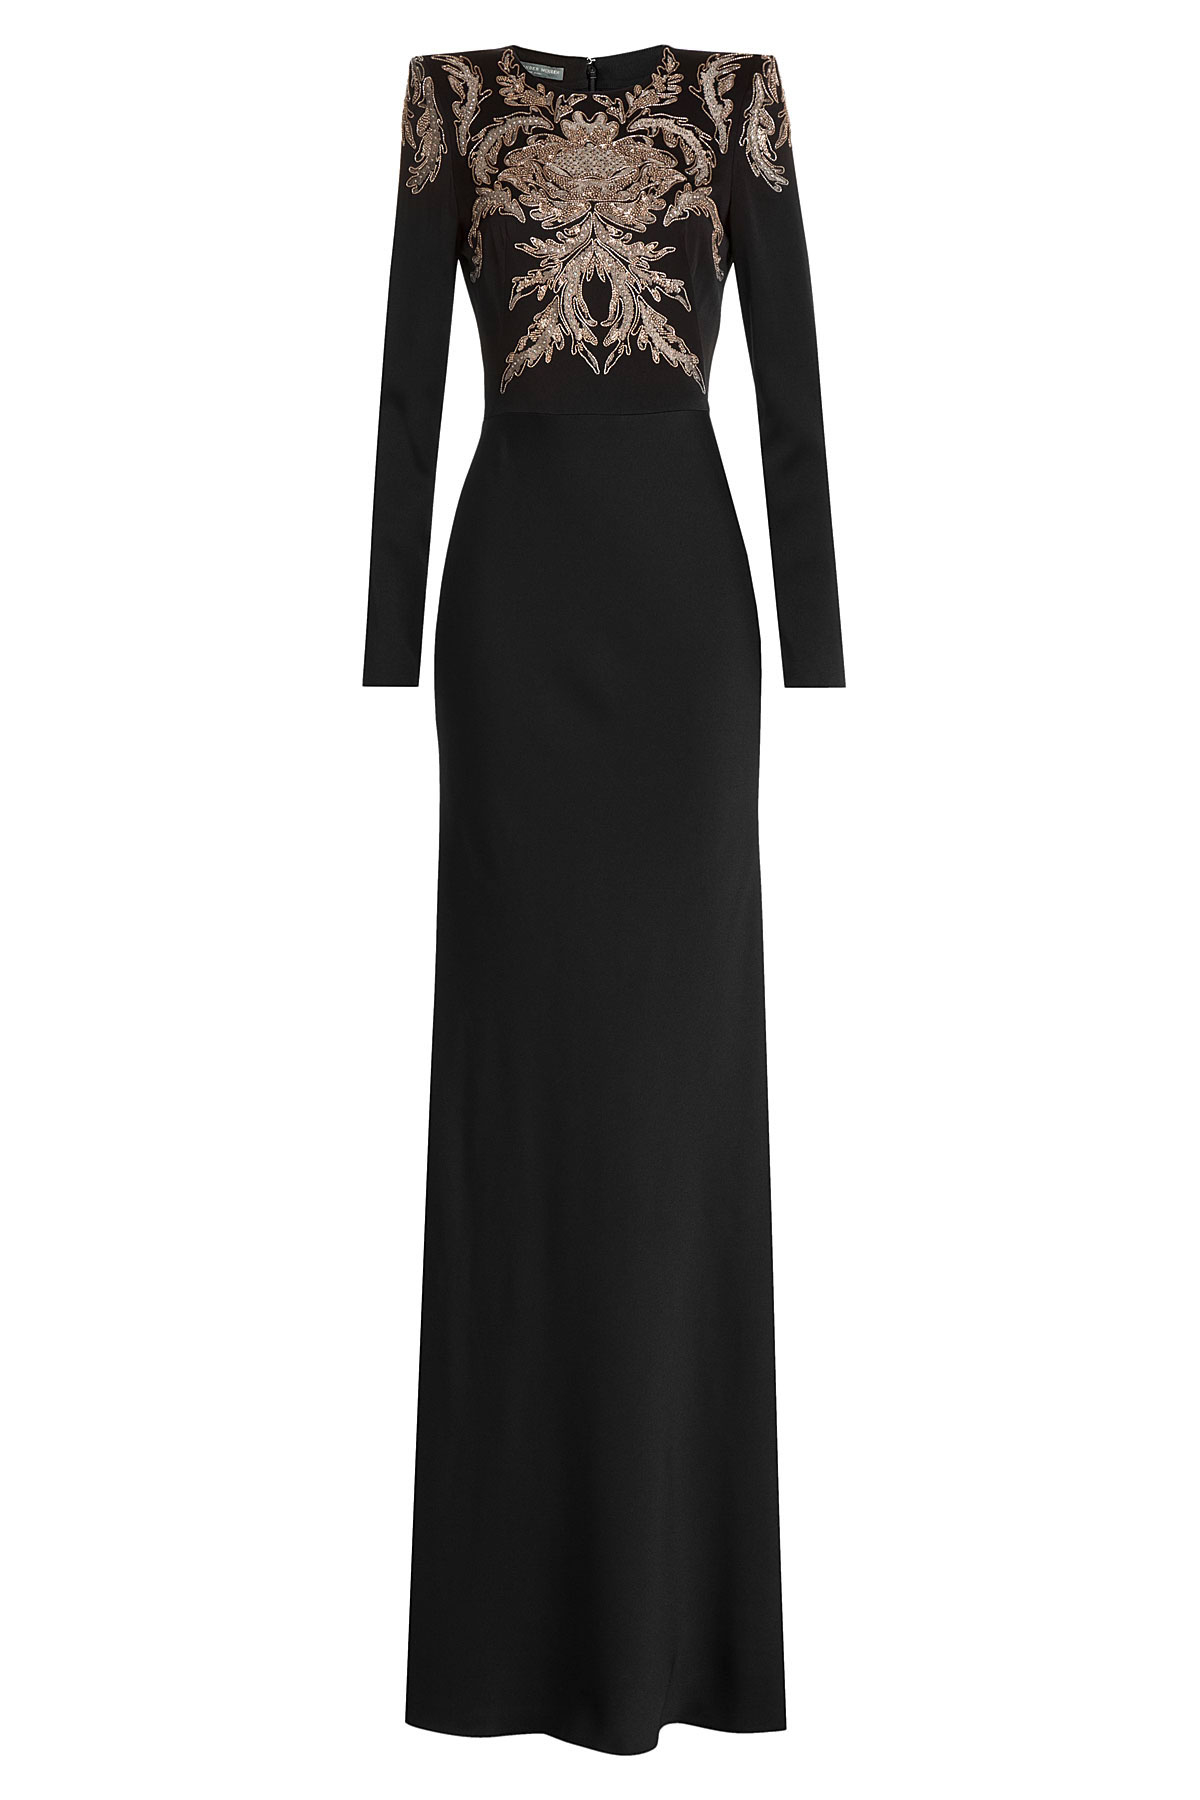 Alexander mcqueen Embellished Evening Gown in Black | Lyst